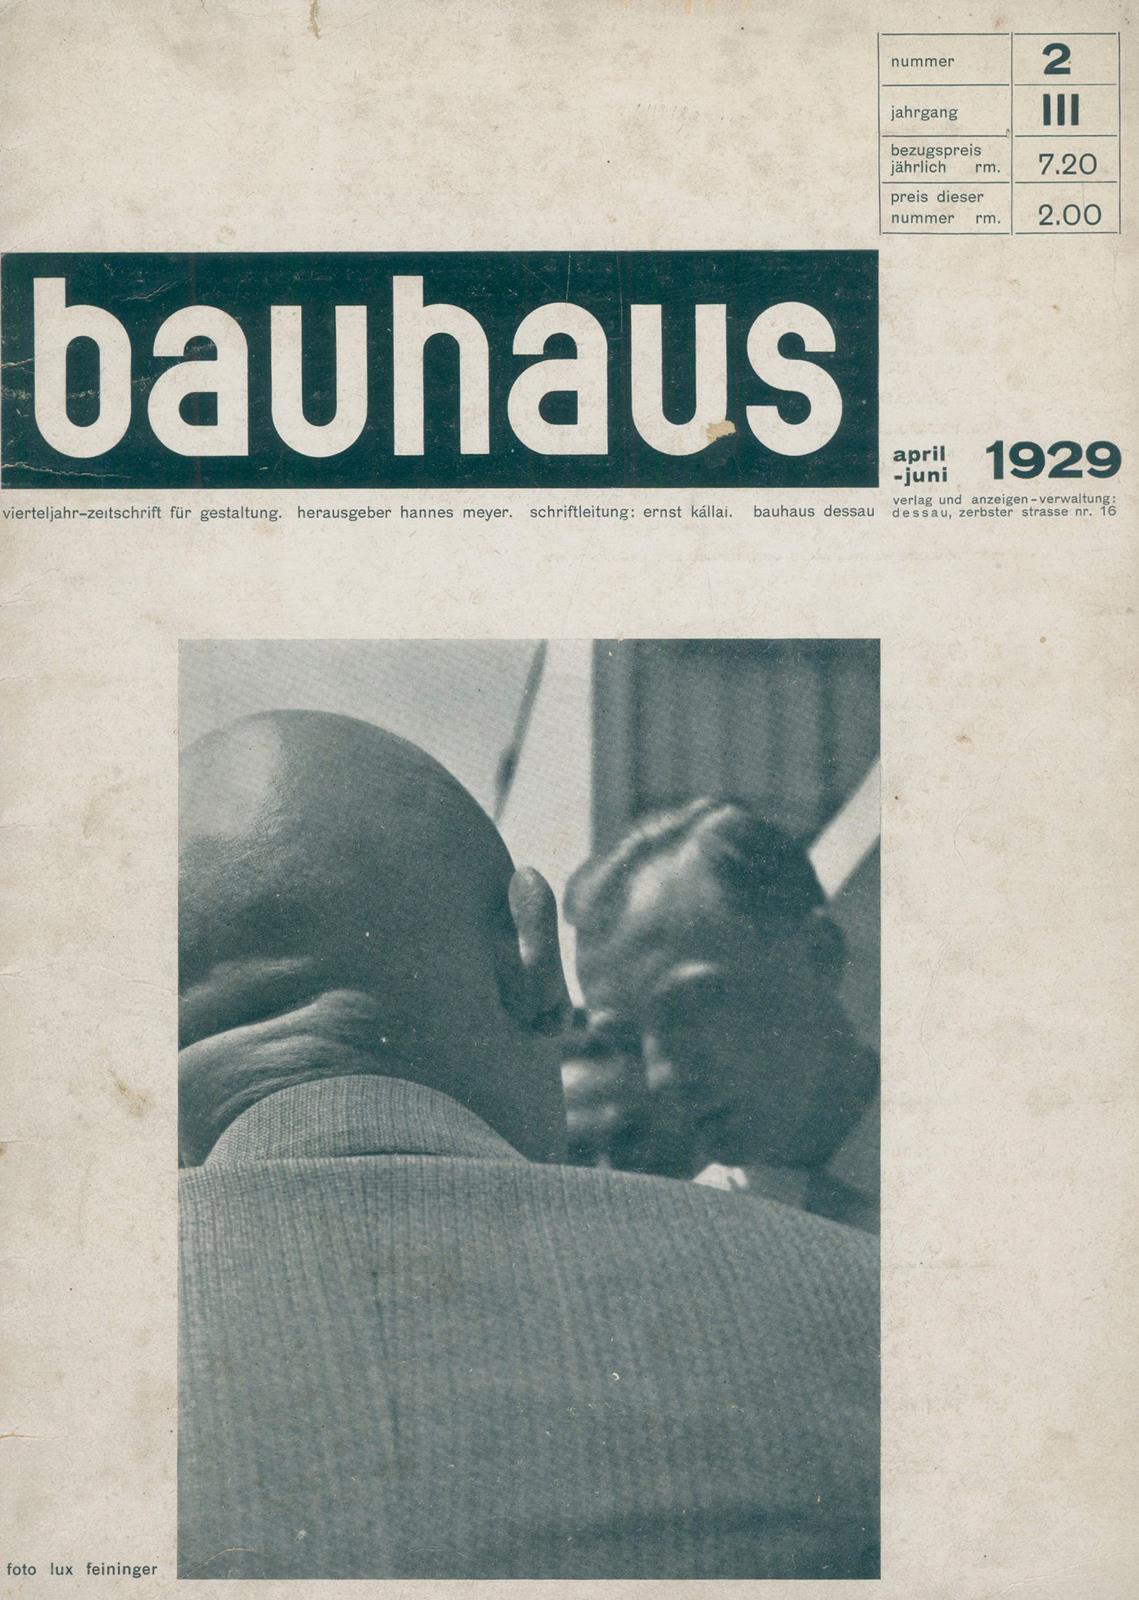 Bauhaus. | Bild Nr.2